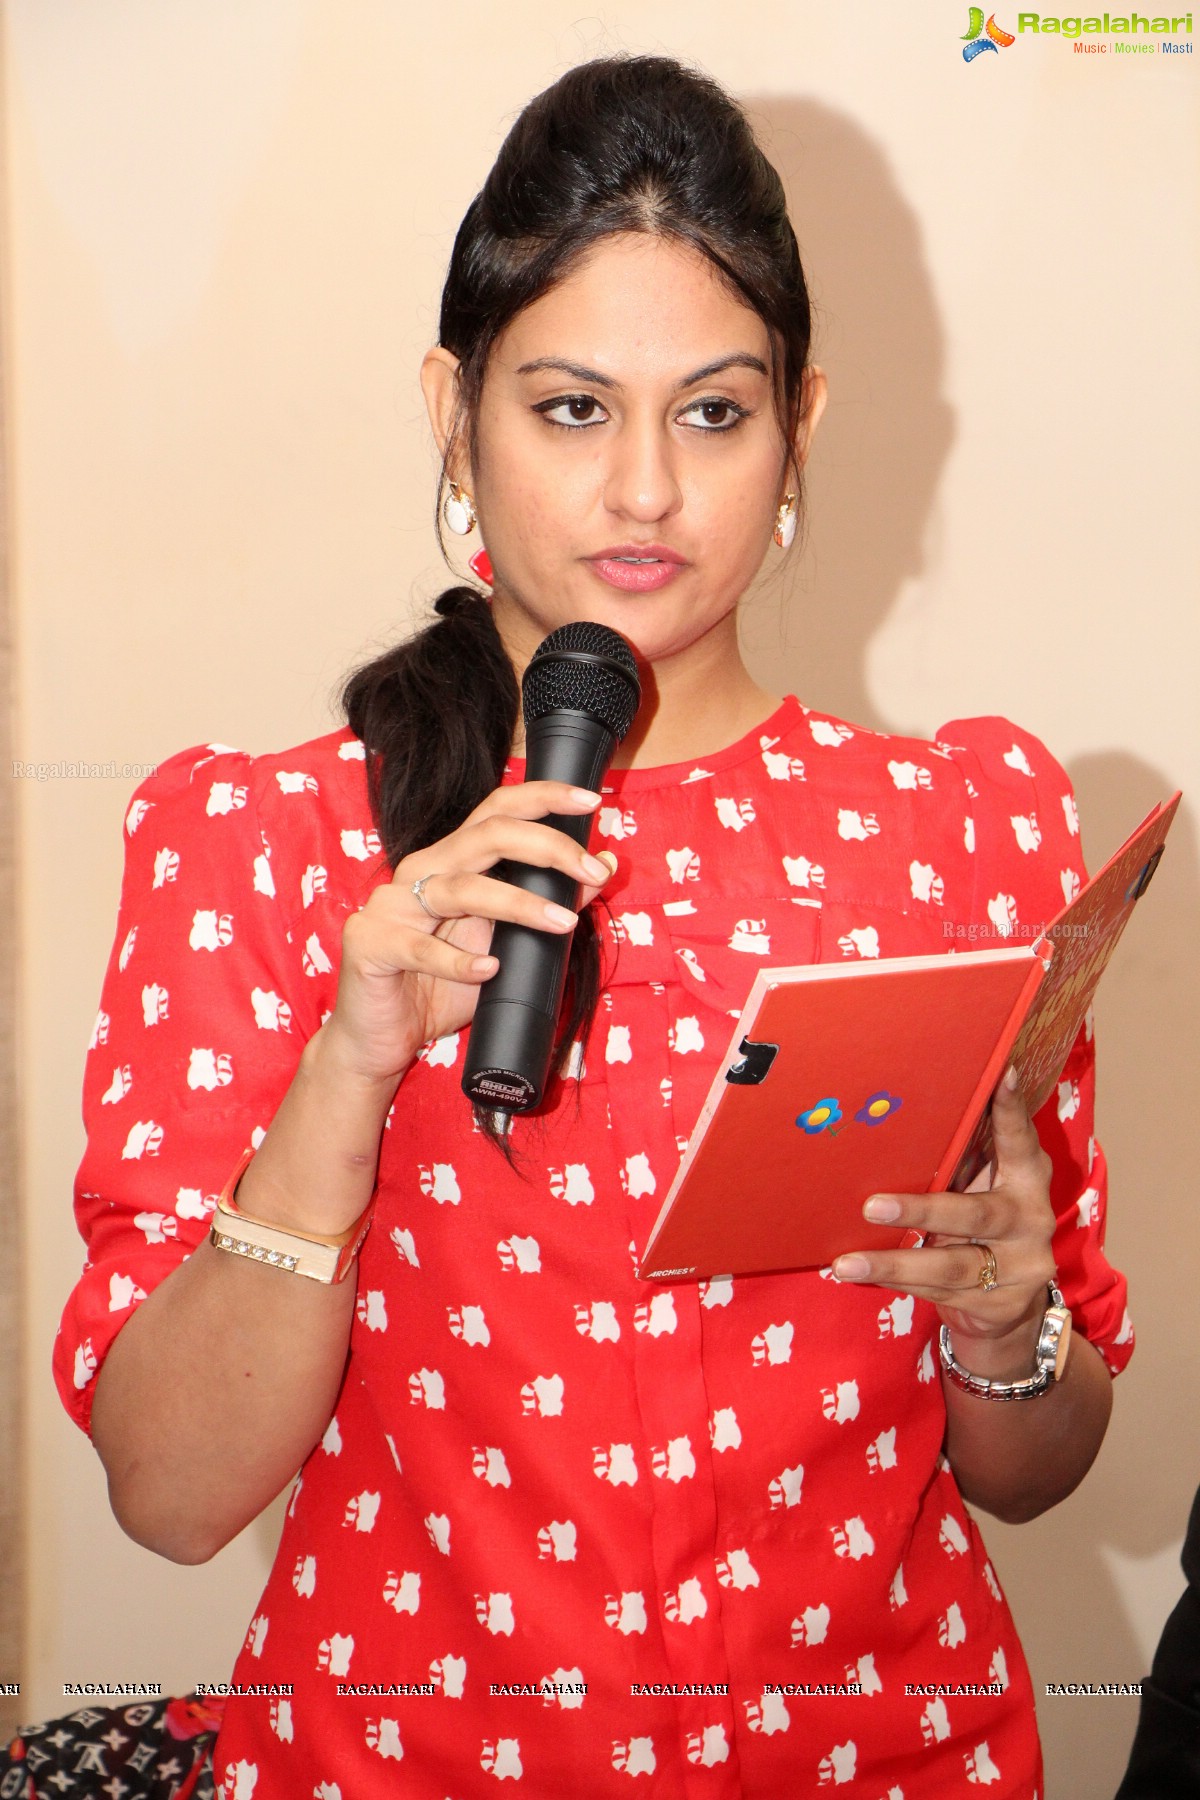 BNI Icon Meet (July 22, 2014) at Raddisson Blu Plaza, Hyderabad